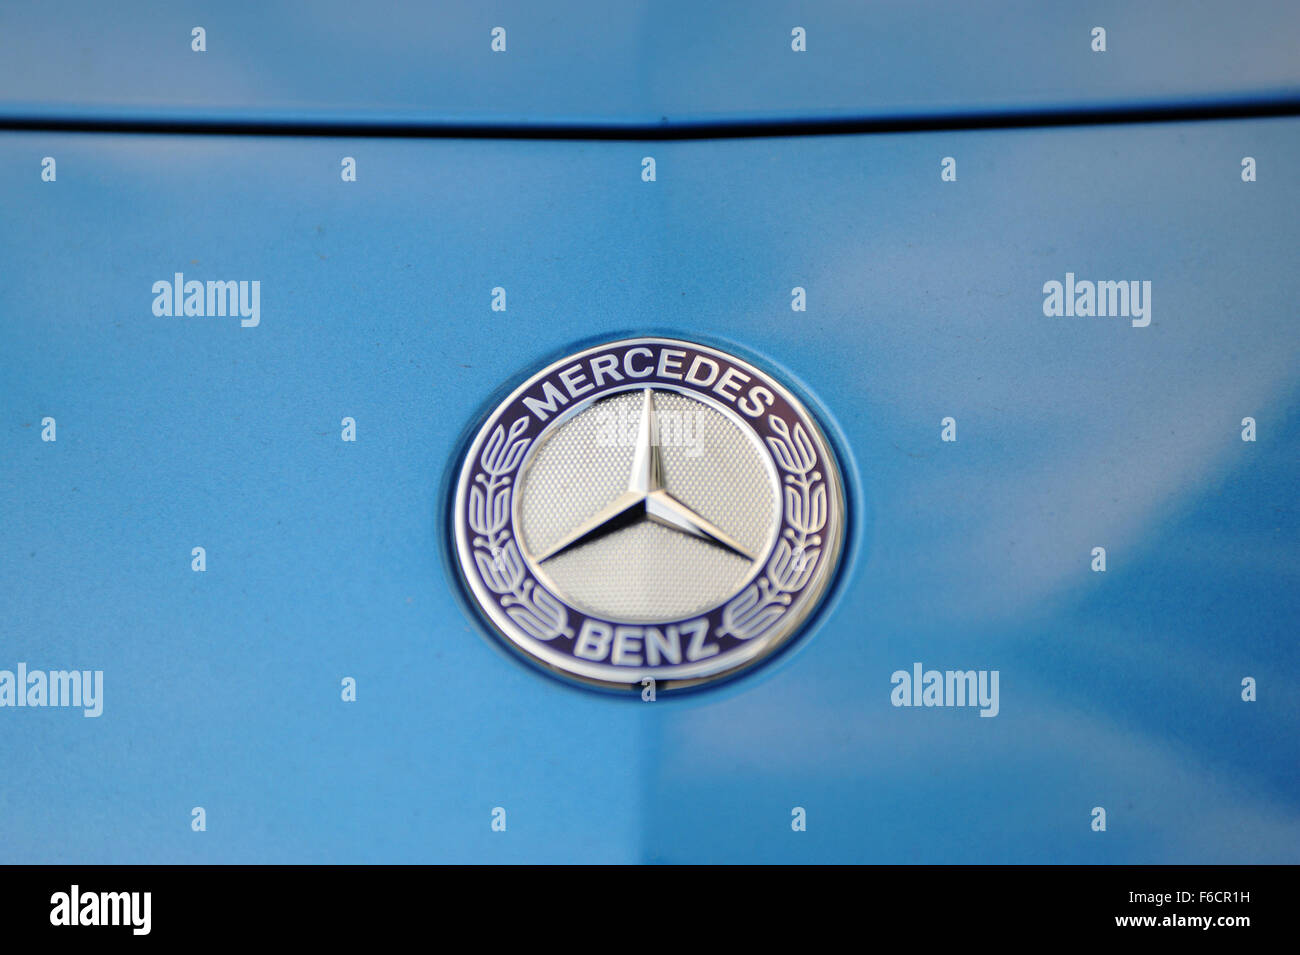 Mercedes A 220 CDI Blue Efficiency AMG Sport Stock Photo